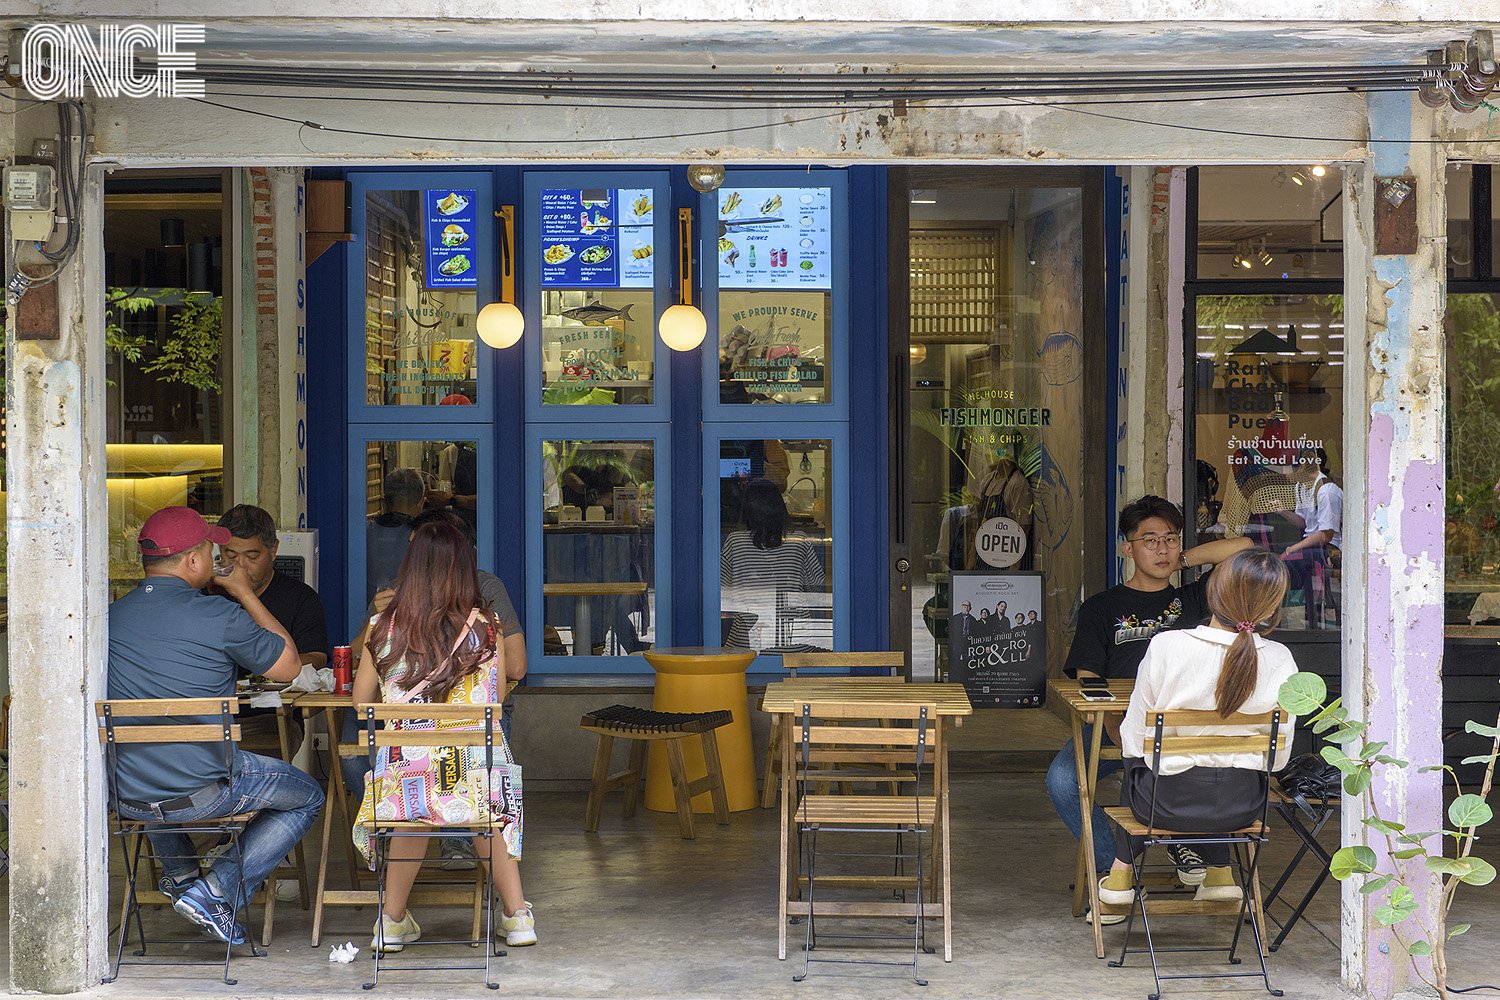 Fishmonger ร้านฟิชแอนด์ชิปส์จากปลาไทย ที่ตั้งเป้าว่าจะขายให้ได้ 100 ชนิดในเวลา 1 ปี